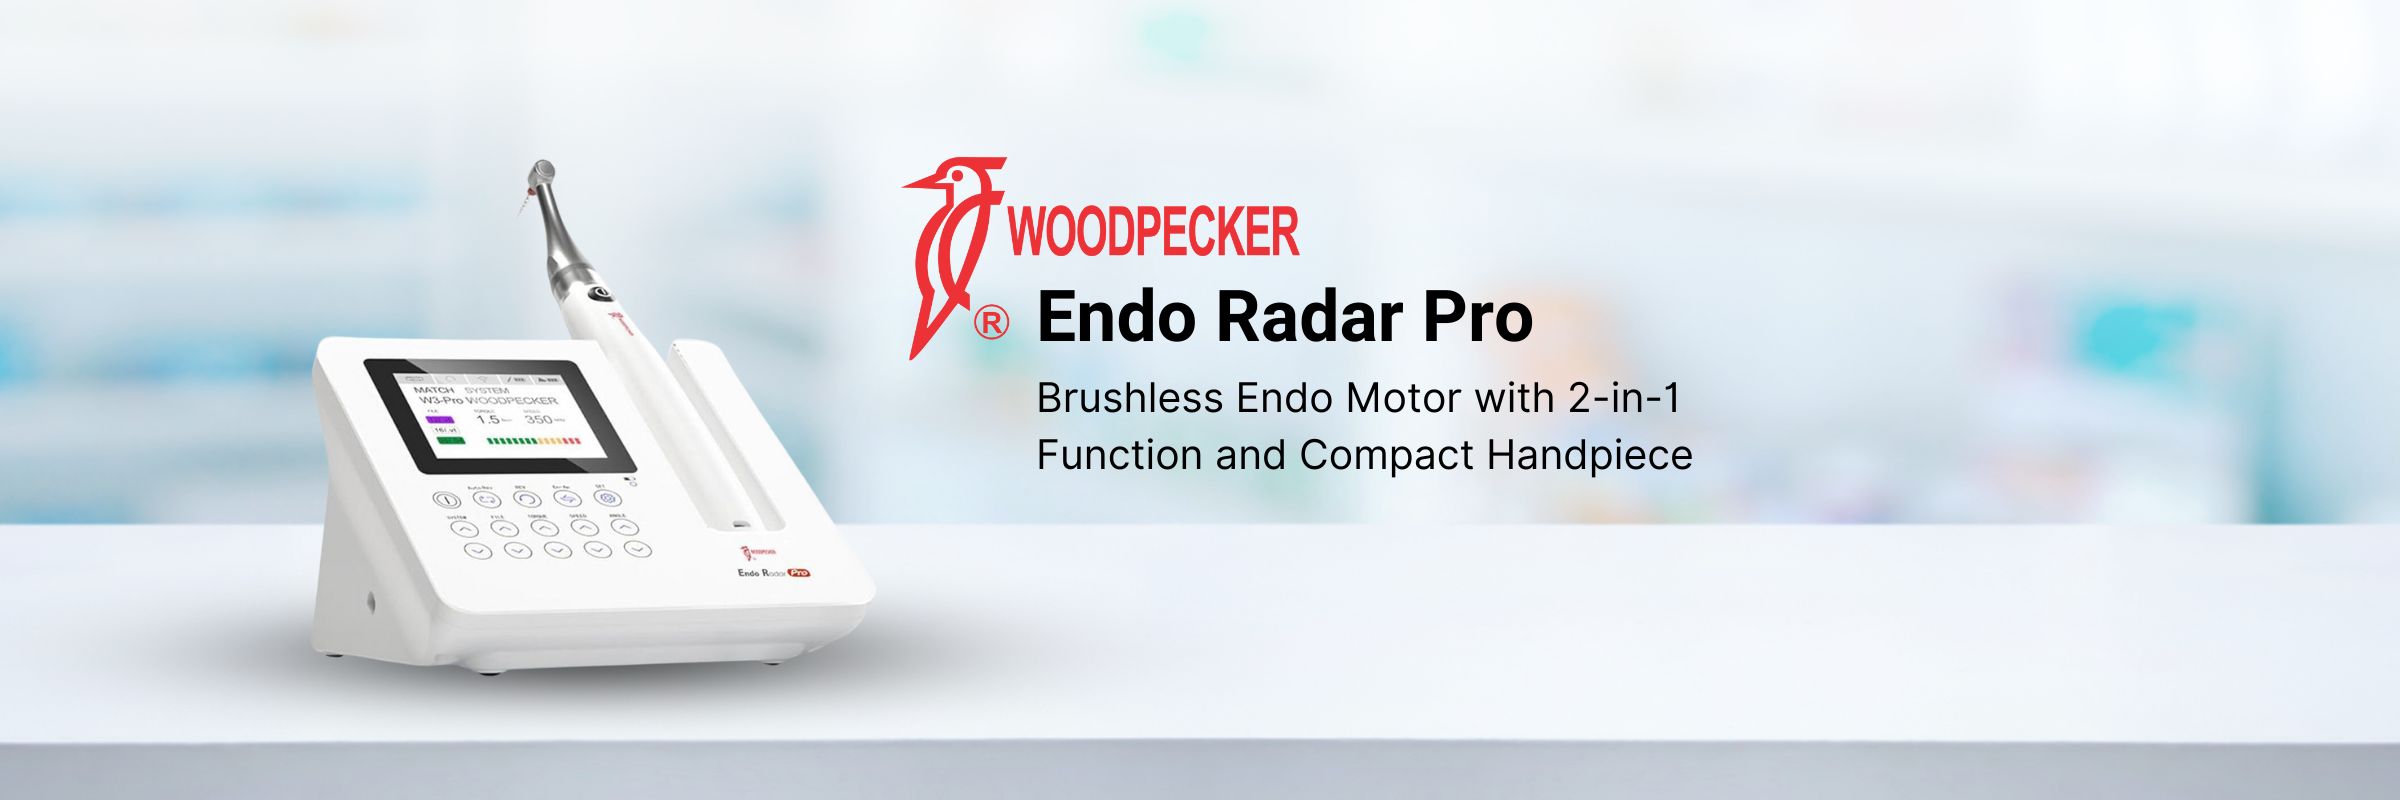 Woodpecker Endo Radar Pro Banner